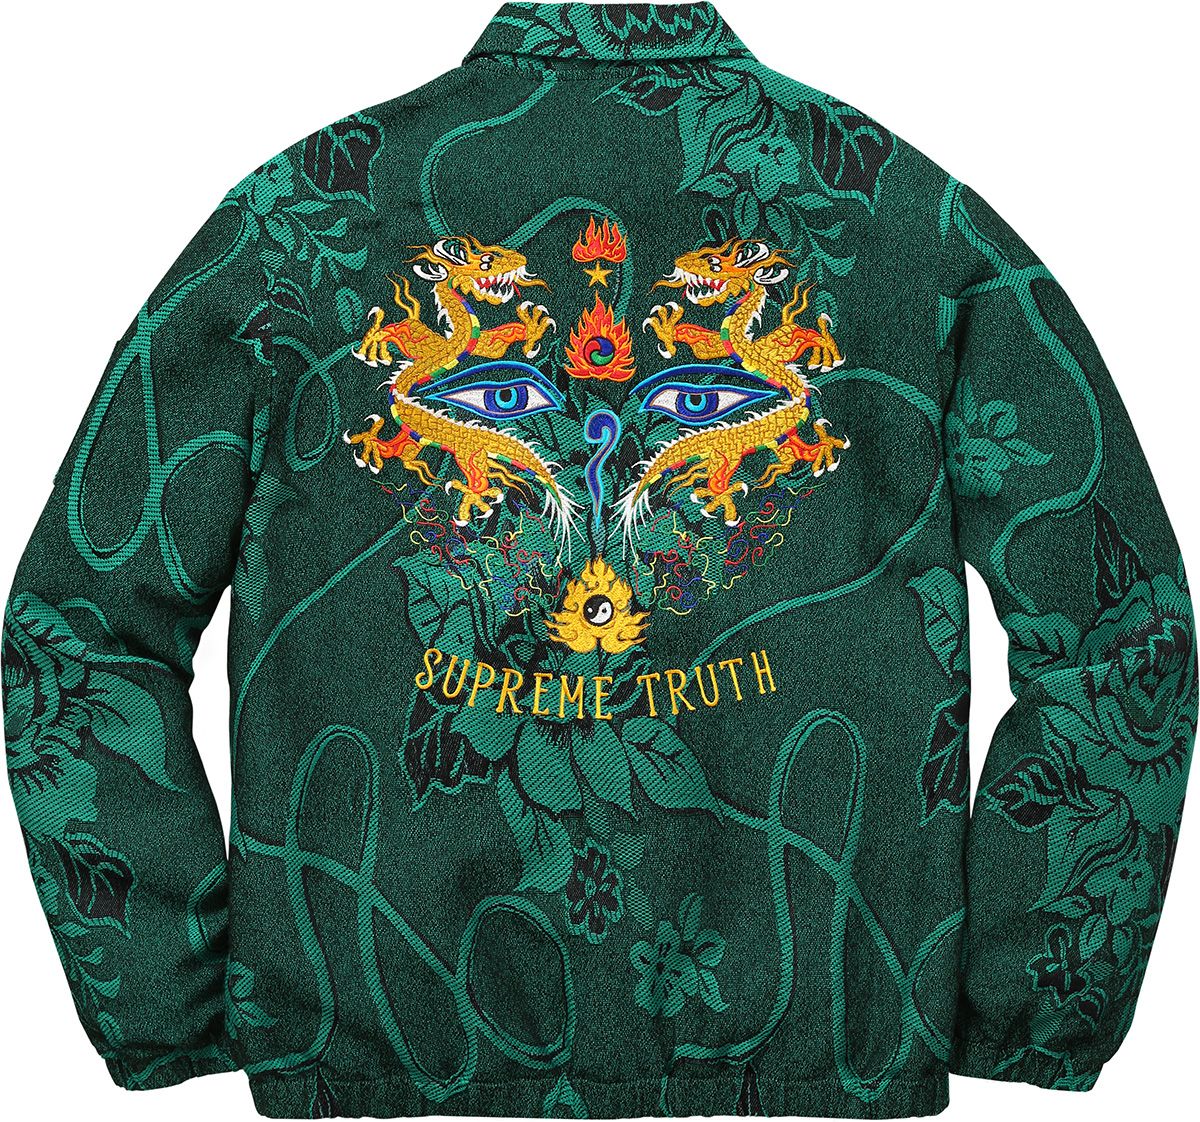 Supreme Truth Tour Jacket - Spring/Summer 2017 Preview – Supreme